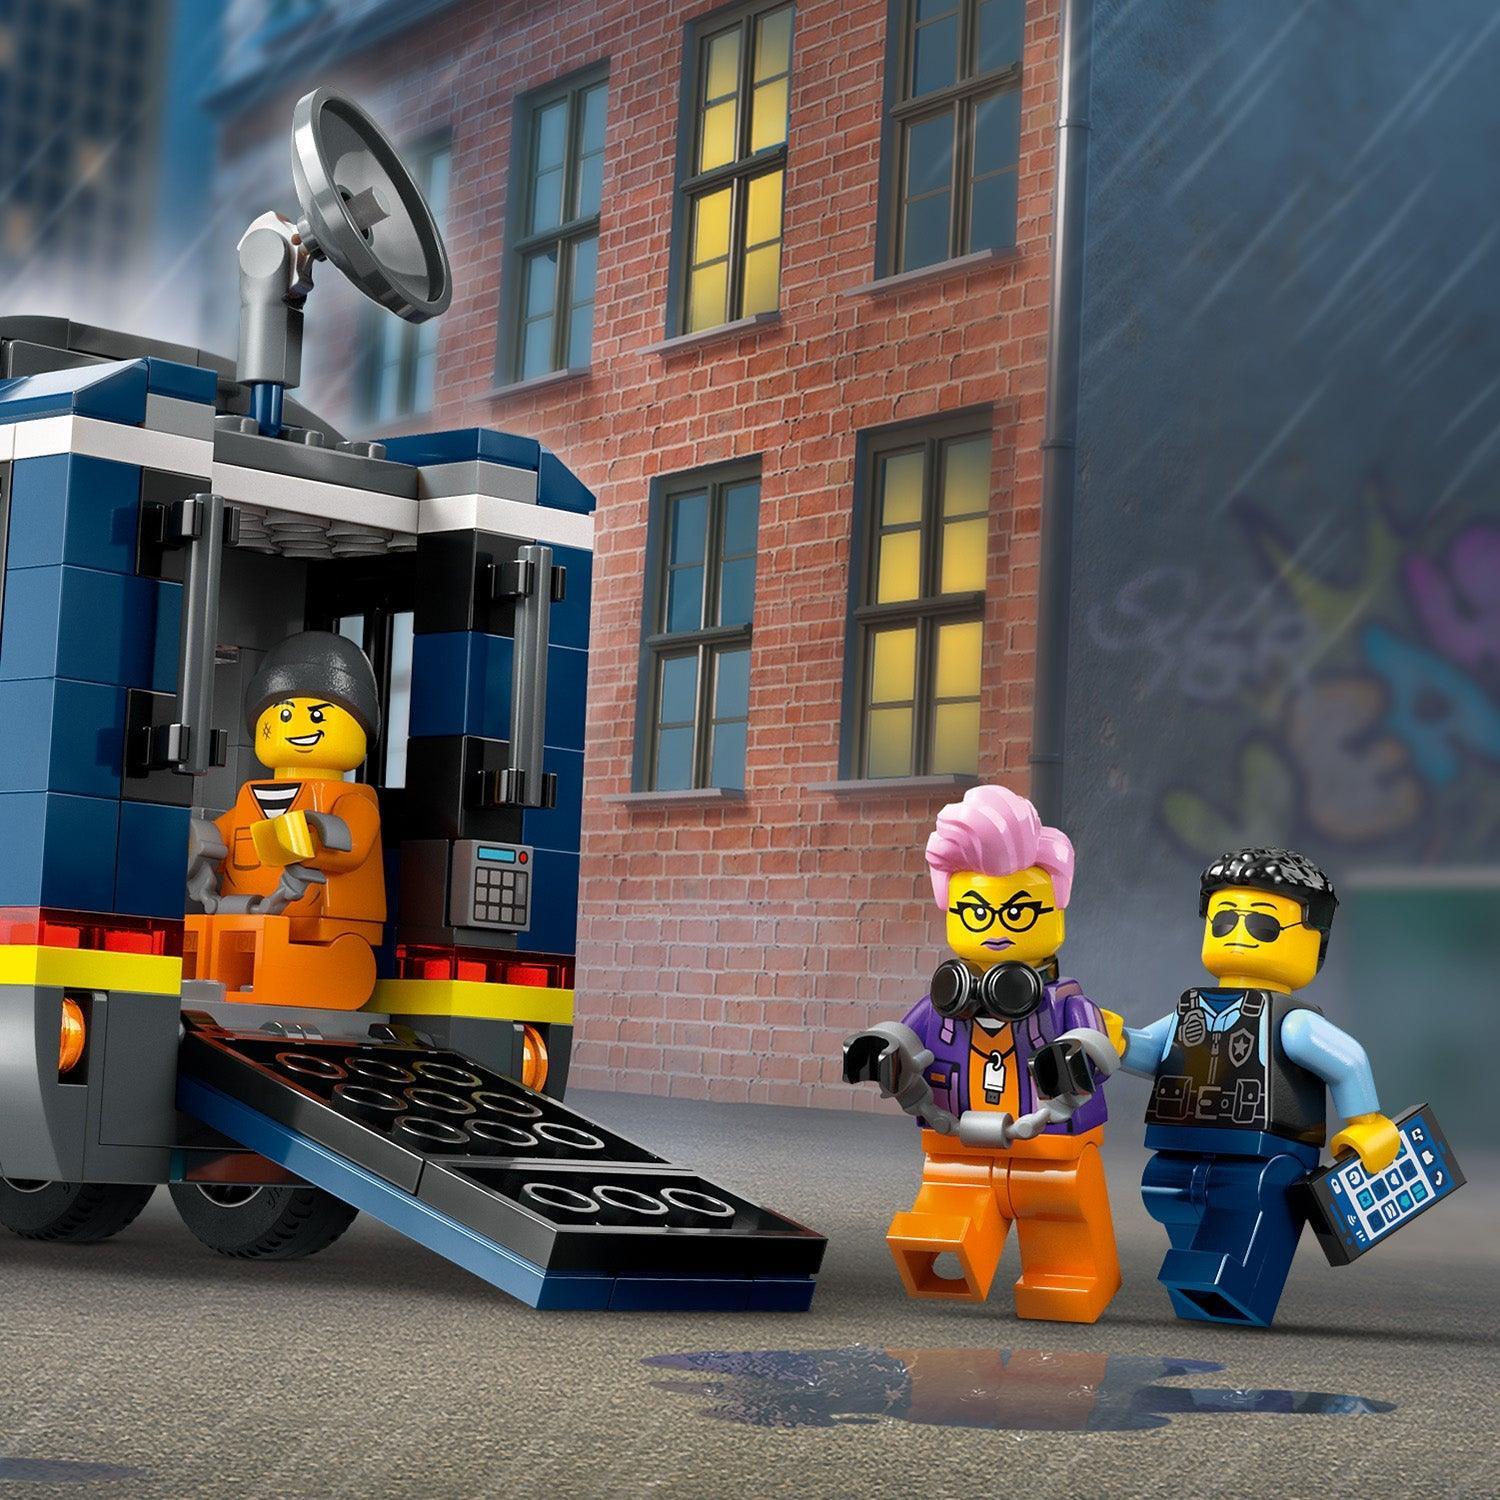 LEGO Police Mobile Crime Lab Truck 60418 City LEGO CITY @ 2TTOYS LEGO €. 54.99